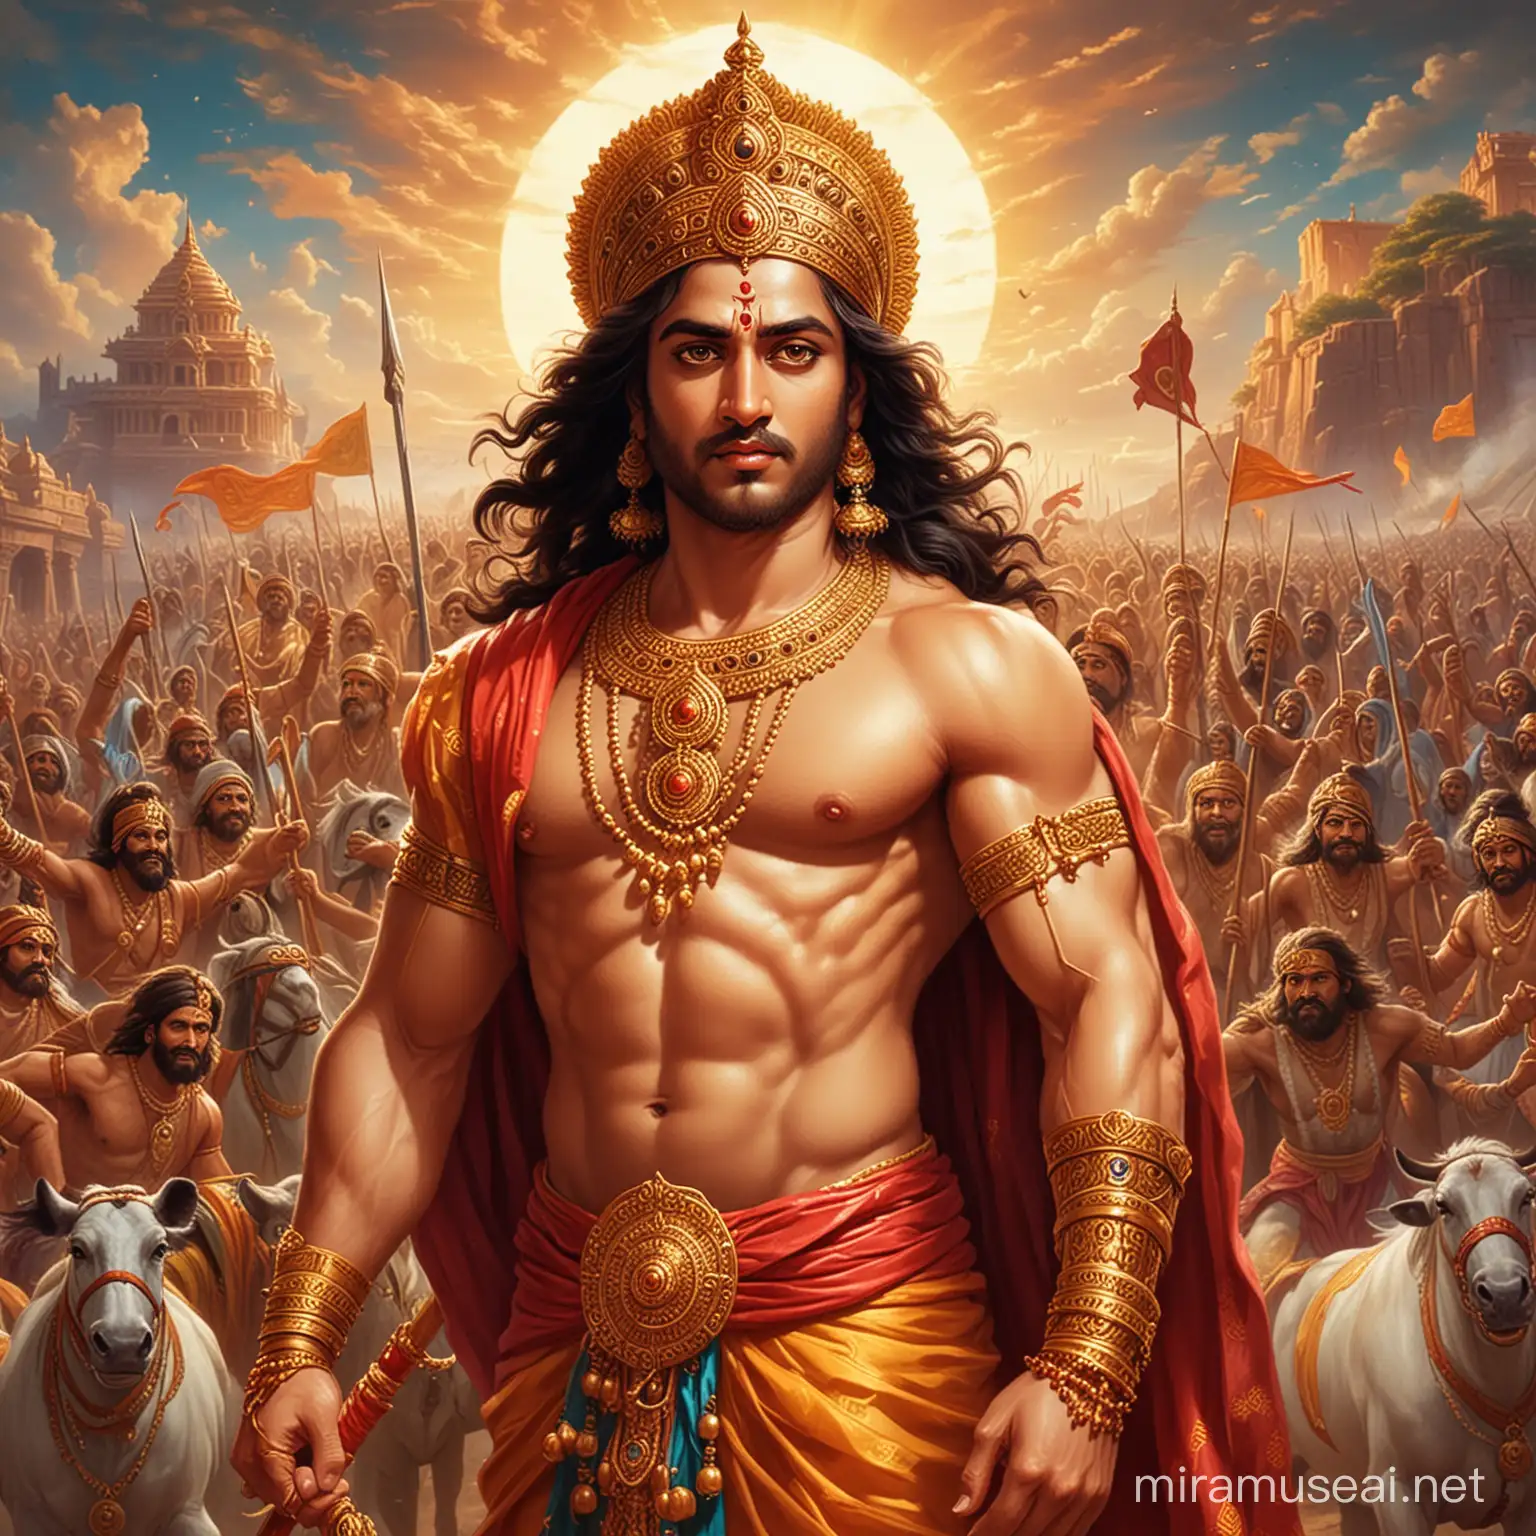 Epic Warrior Karna from Mahabharata Heroic Figure in Ancient Battle